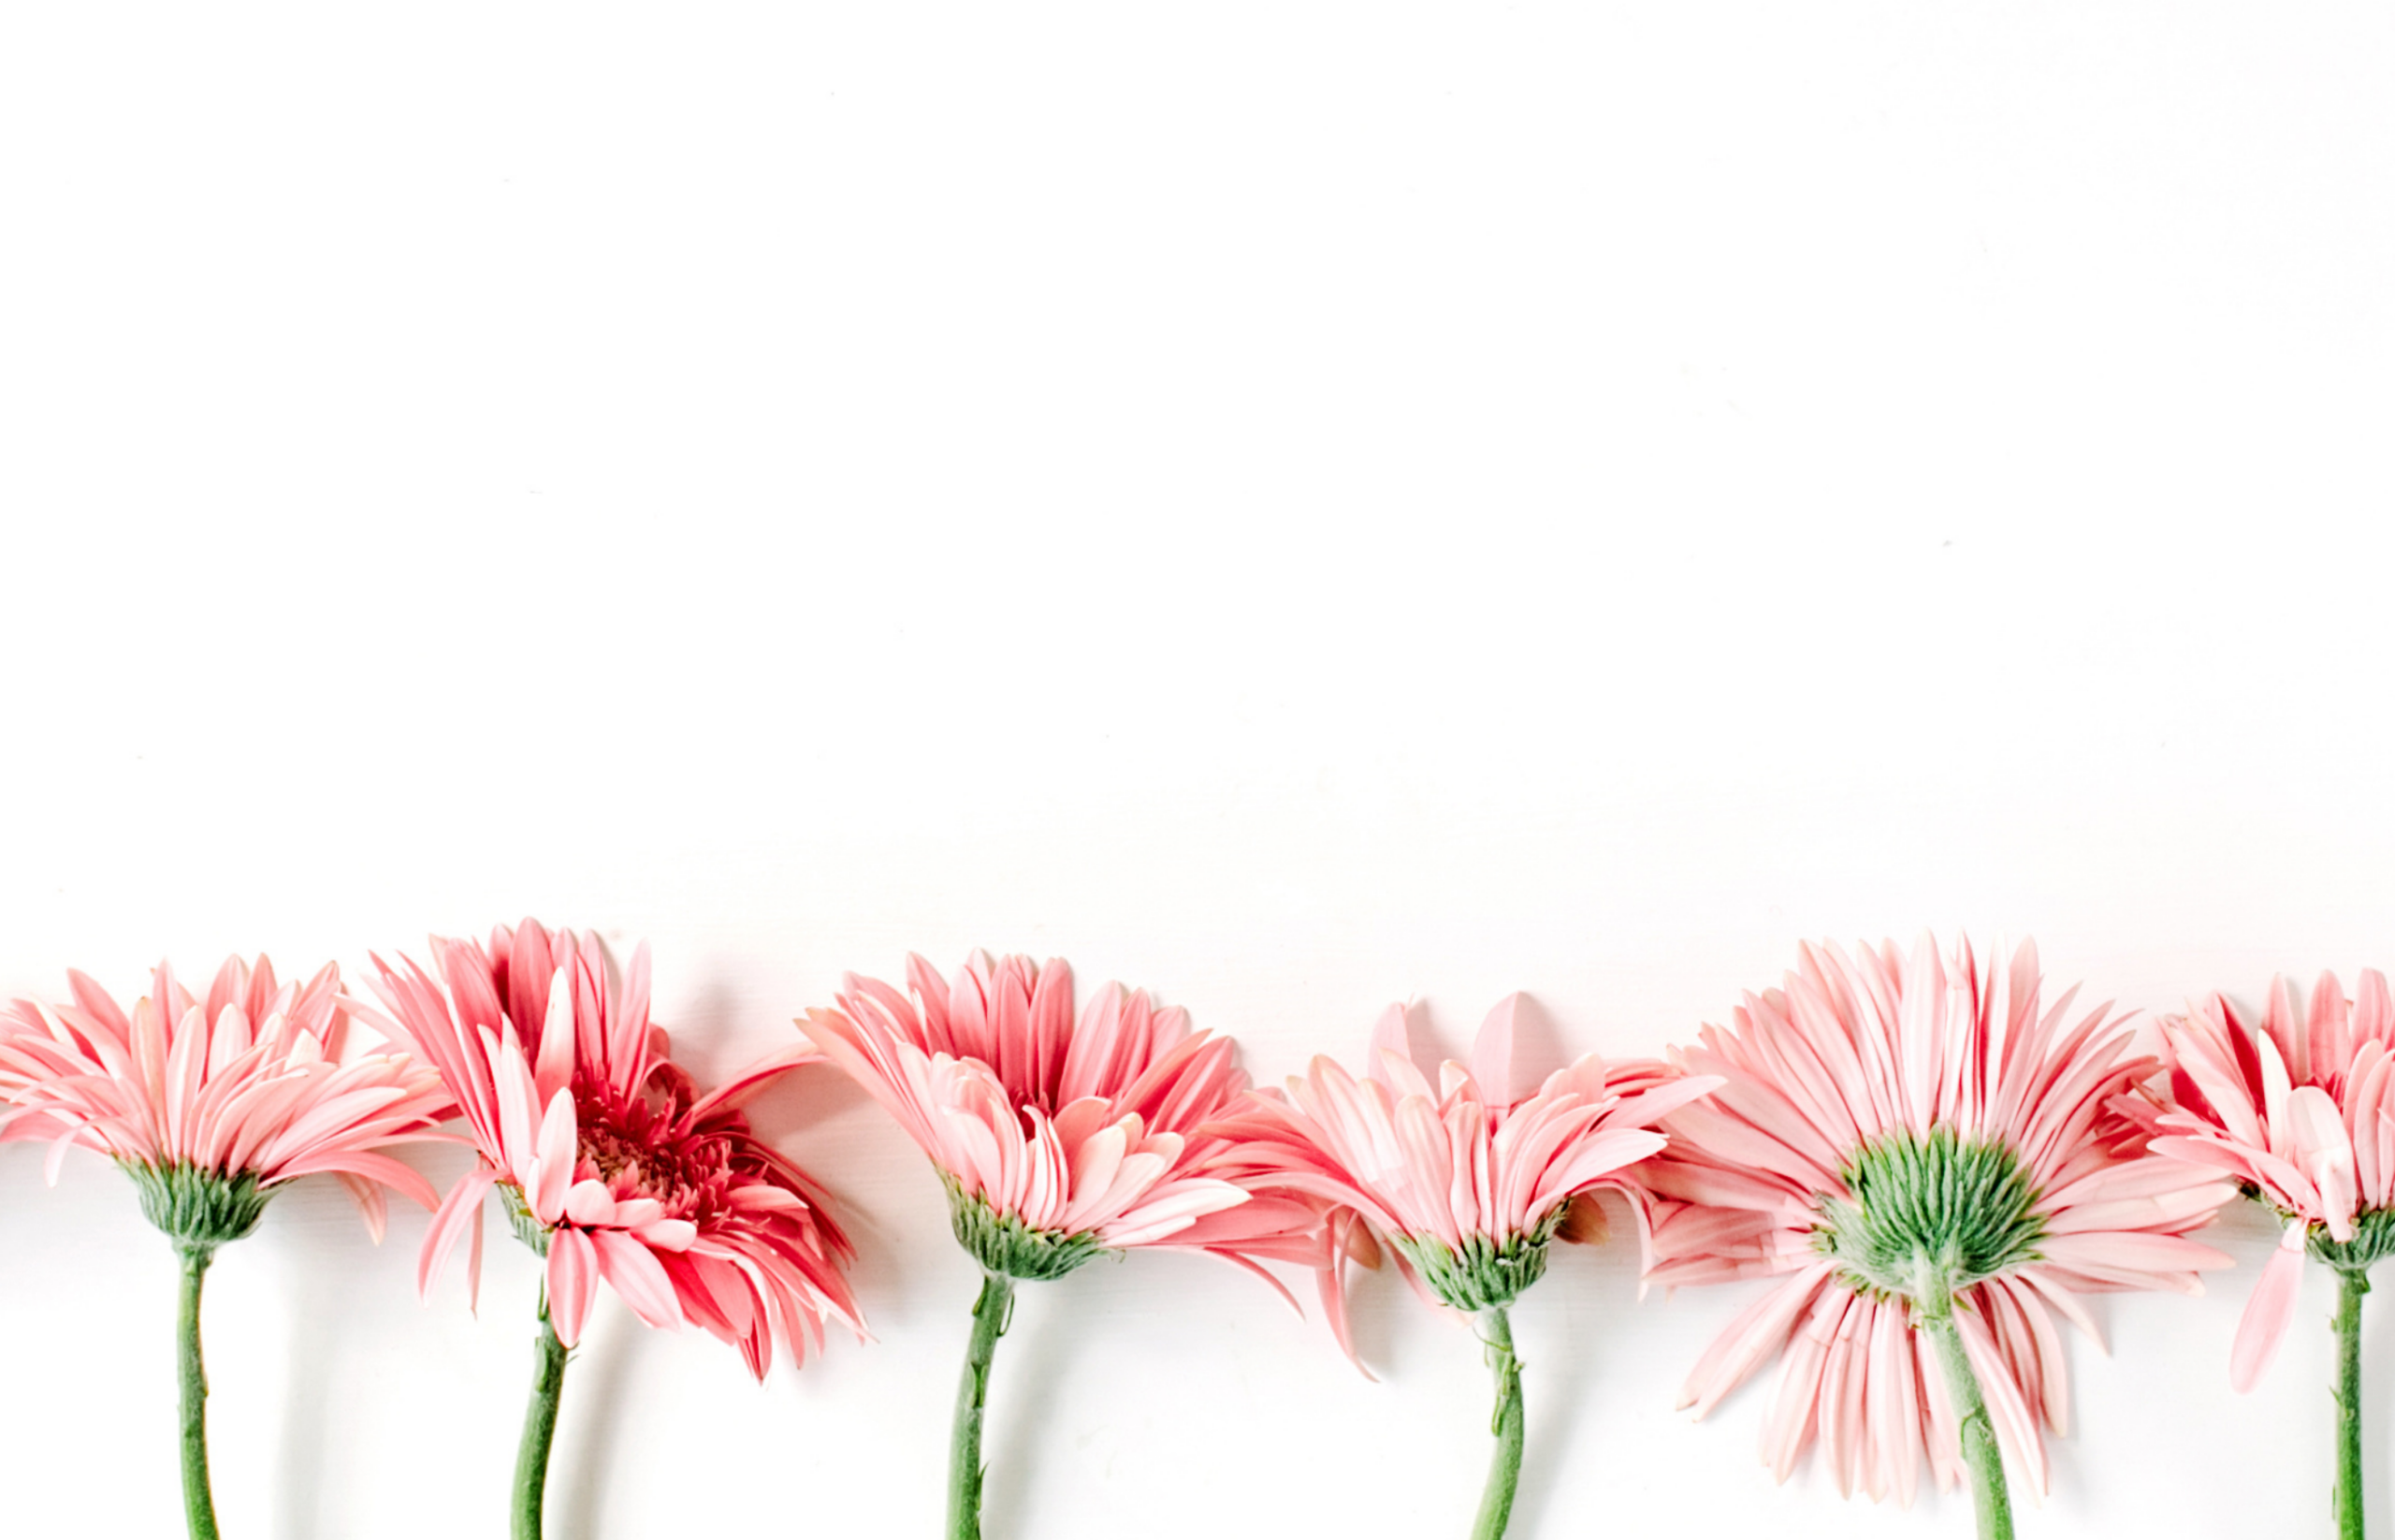 Floral Desktop Wallpaper: 35 Gorgeous Desktop Backgrounds